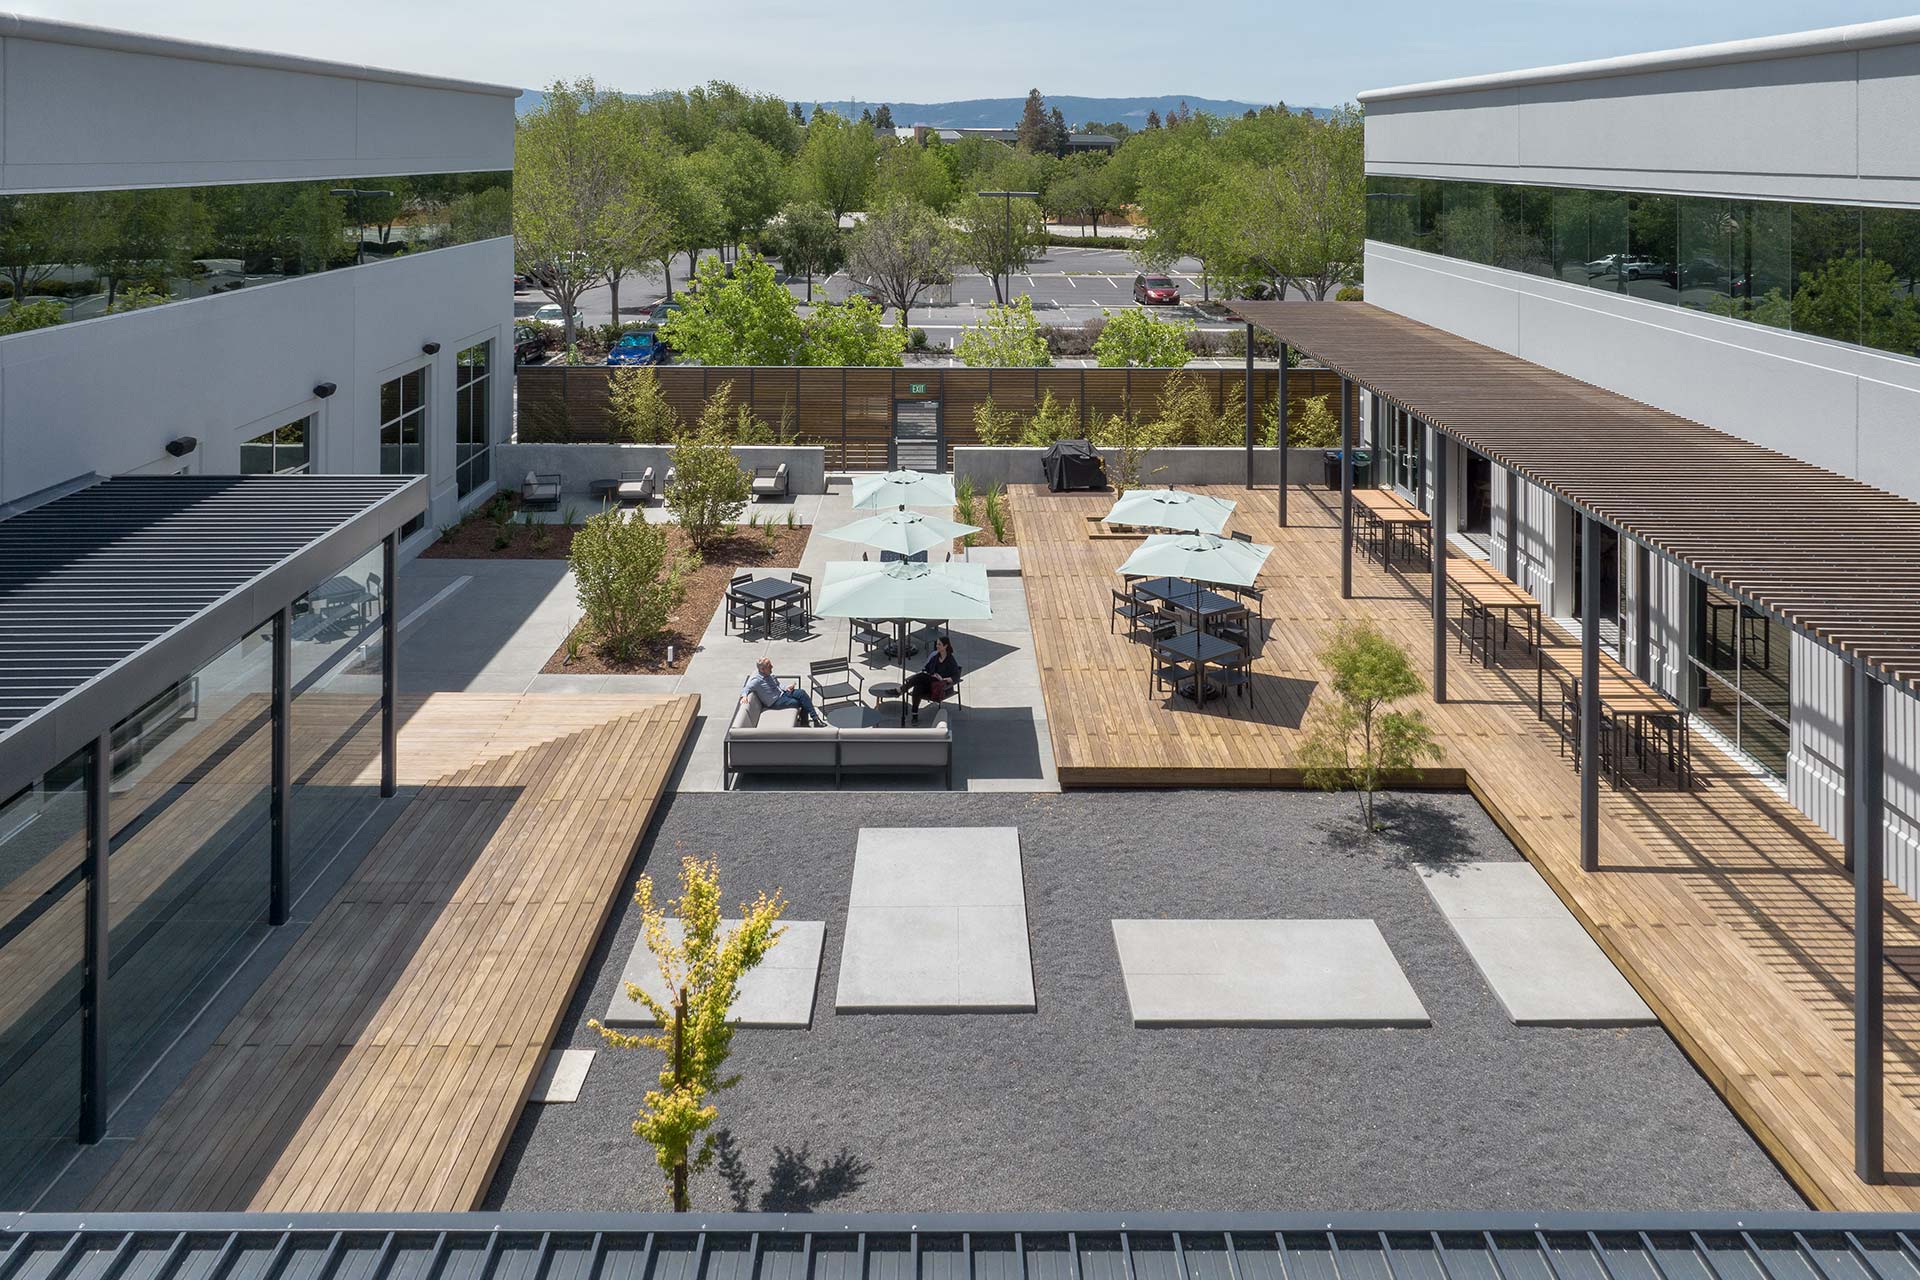 Exterior at Takara Bio life science facility, enclosed courtyard outdoor amenity space between buildings